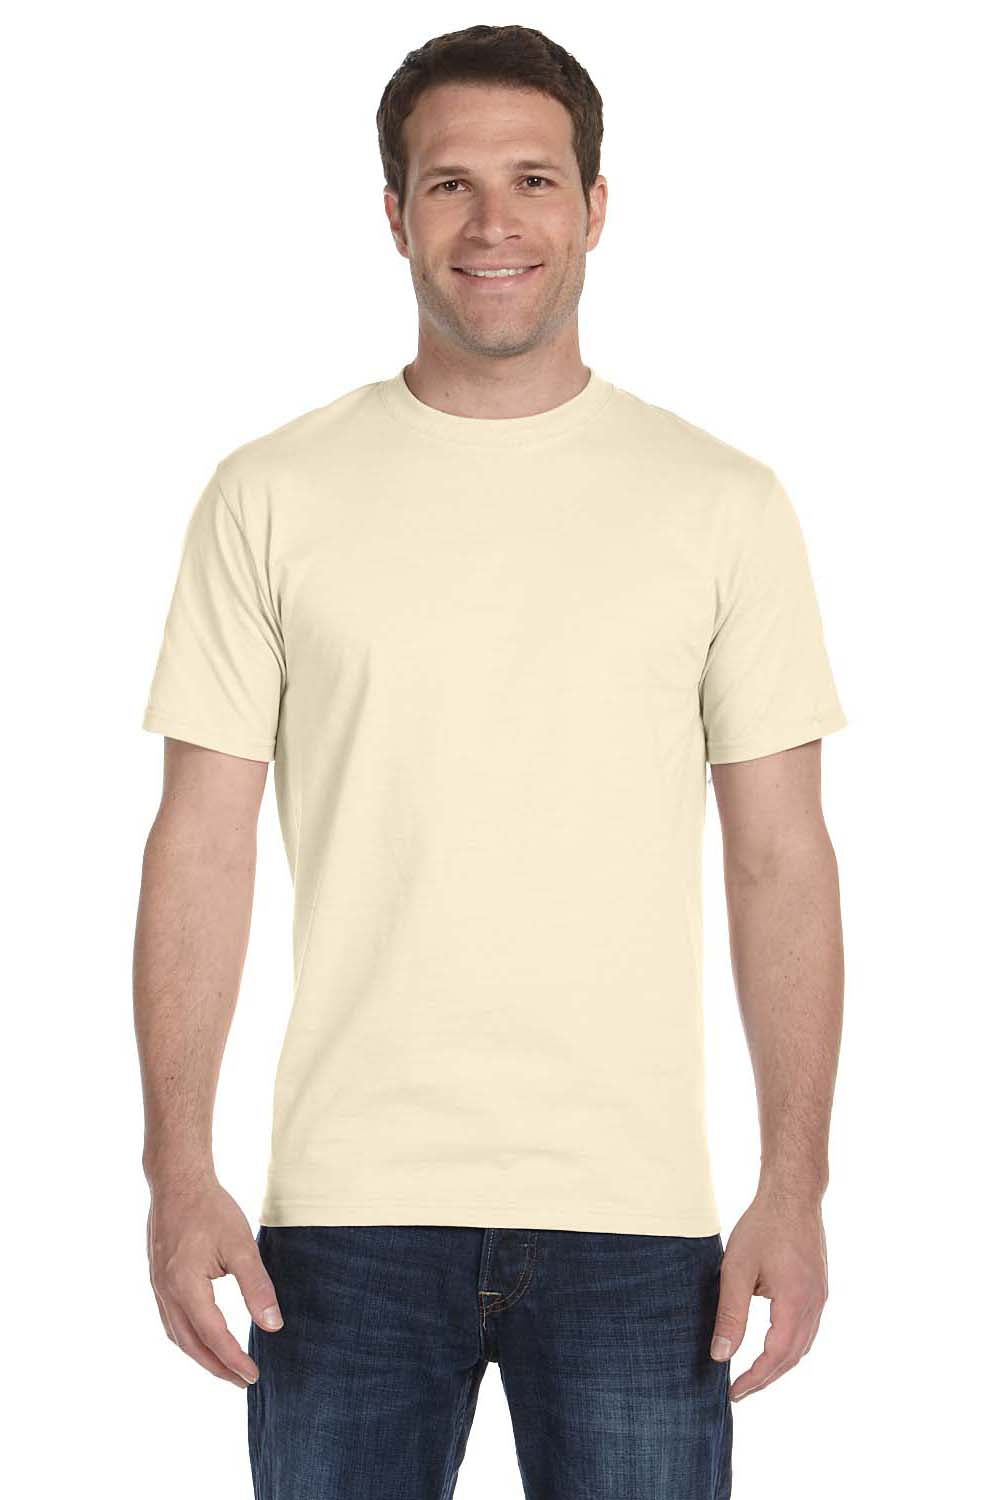 Hanes 5180 Mens Beefy-T Short Sleeve Crewneck T-Shirt Natural Front